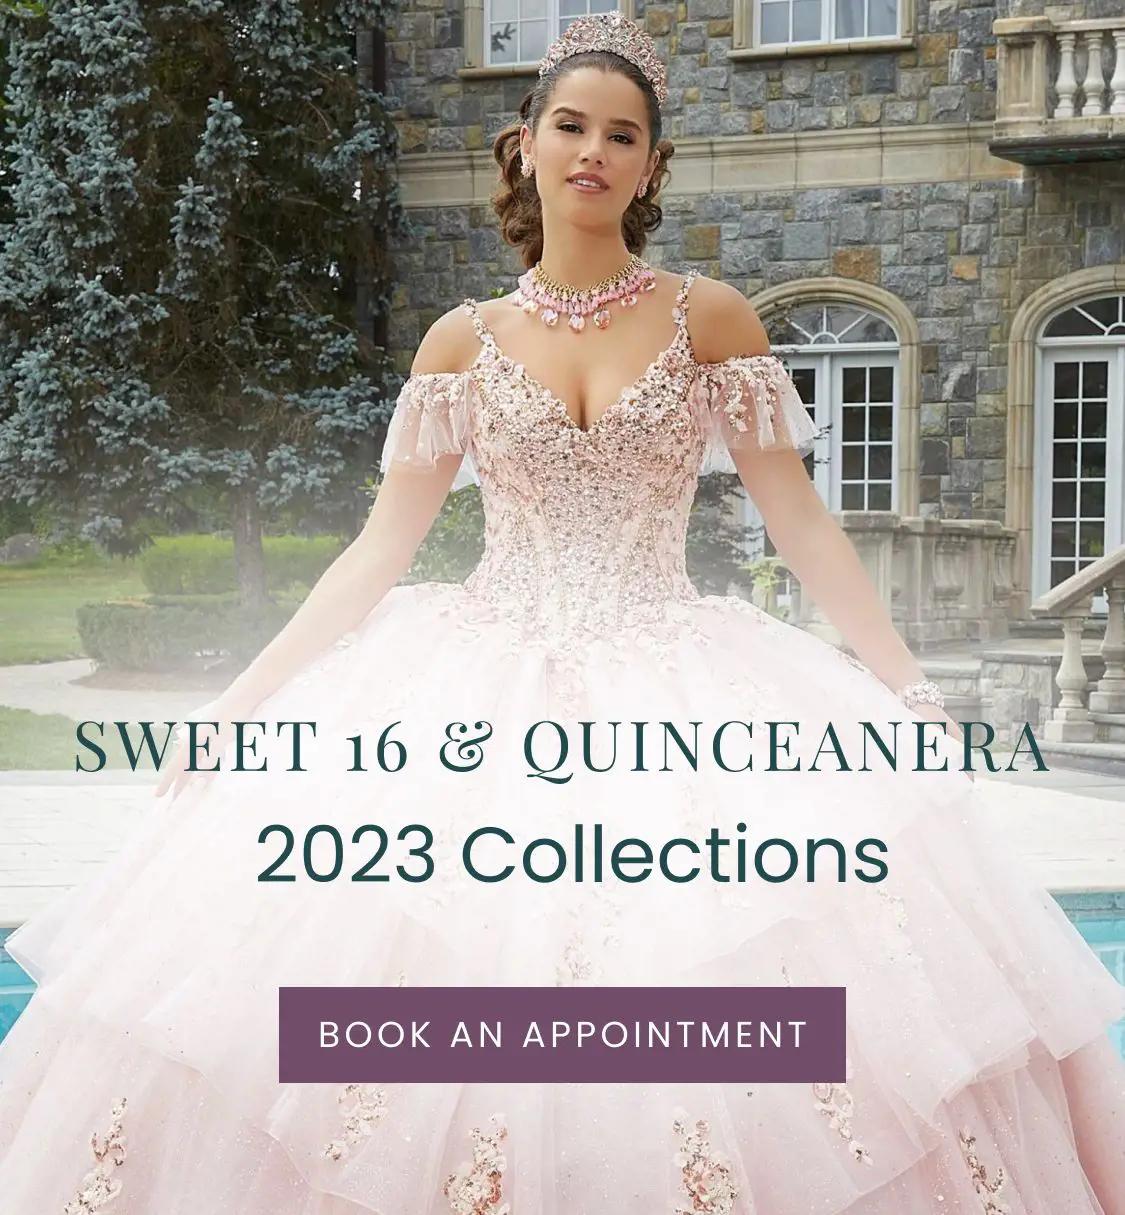 Banner Promoting Quinceanera Dress